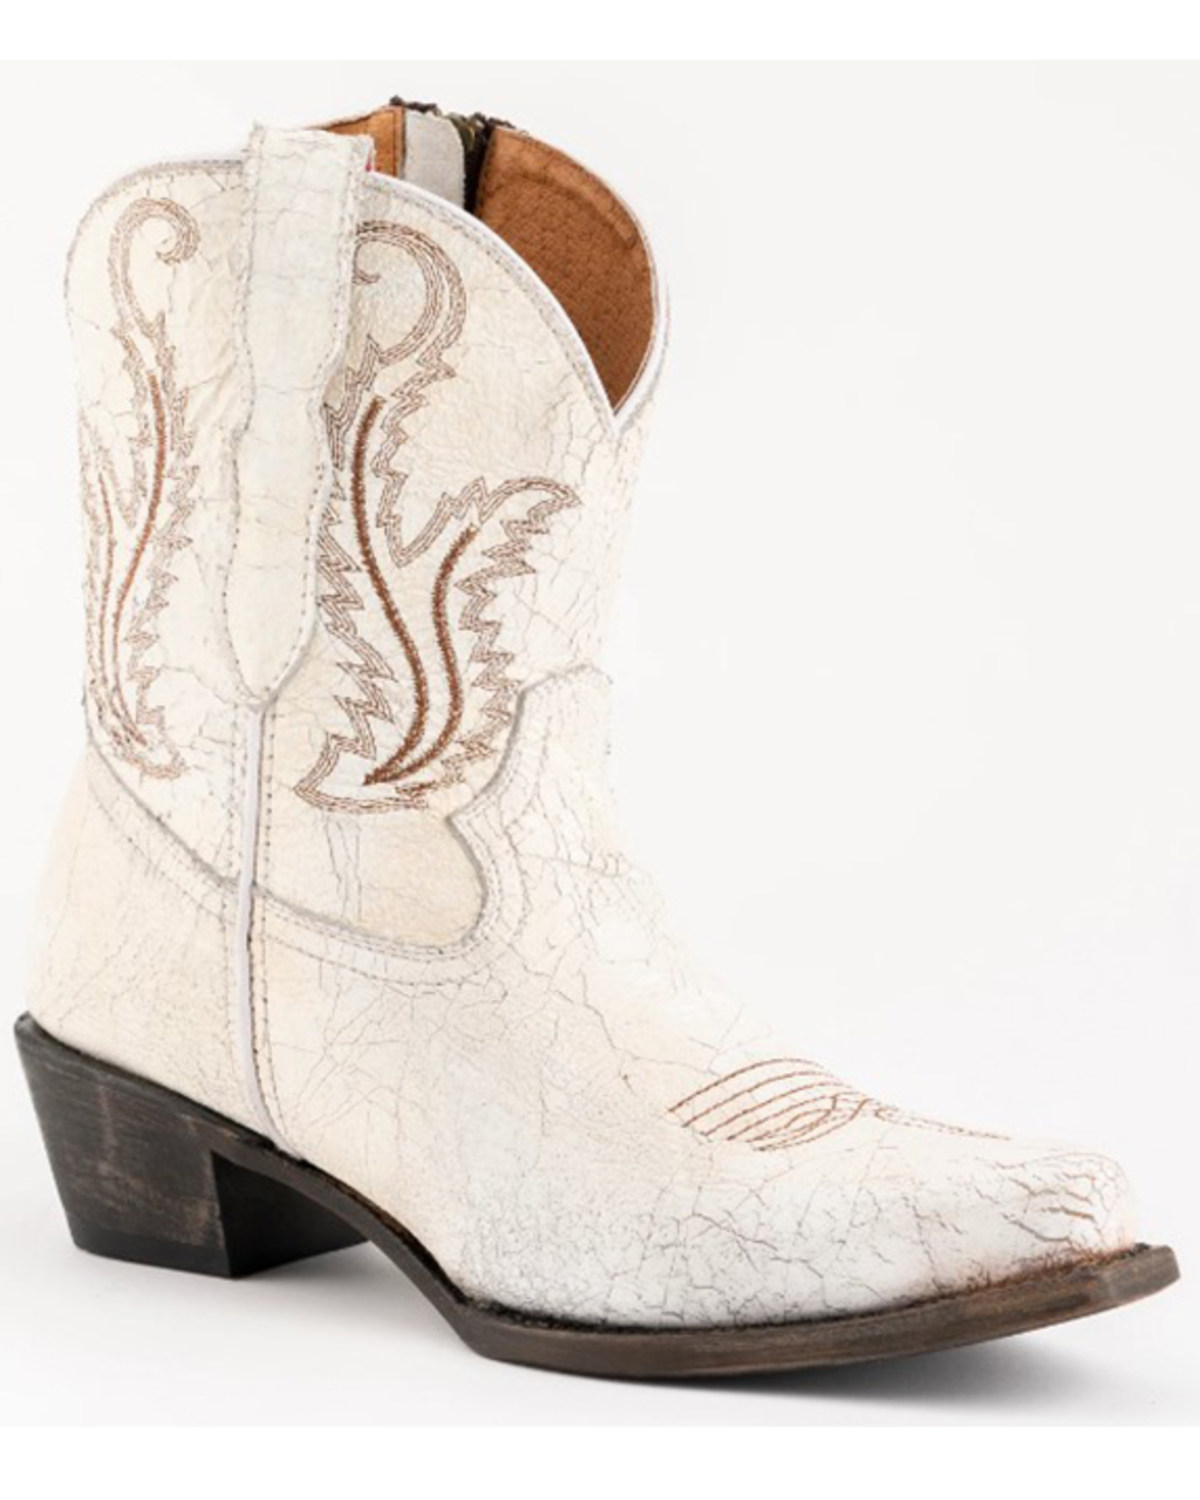 Ferrini Women's Molly Western Boots - Snip Toe